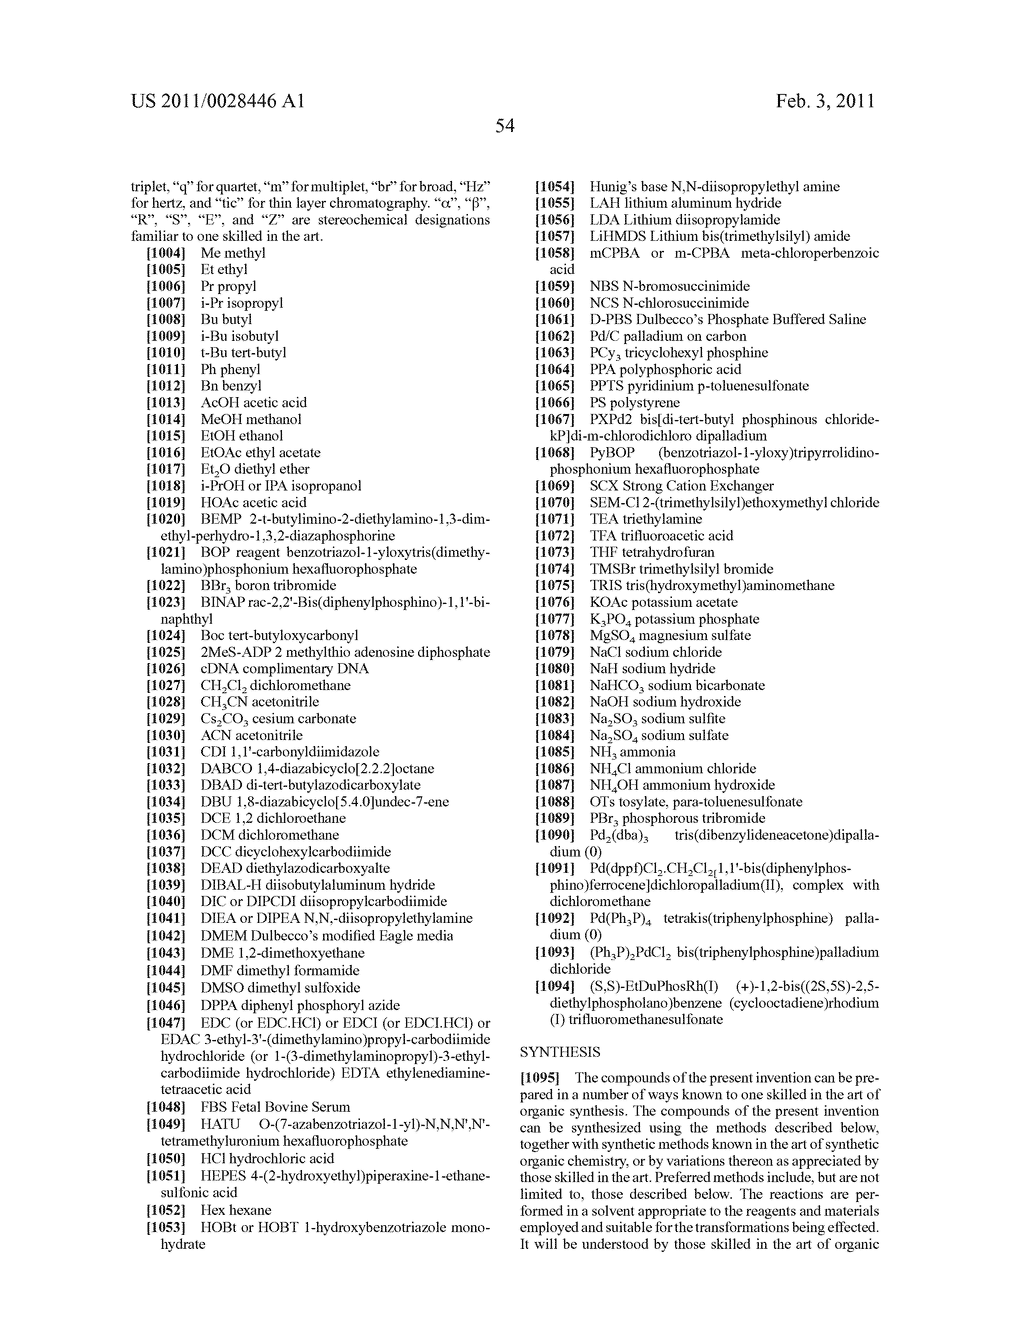 ARYLPROPIONAMIDE, ARYLACRYLAMIDE, ARYLPROPYNAMIDE, OR ARYLMETHYLUREA ANALOGS AS FACTOR XIA INHIBITORS - diagram, schematic, and image 55